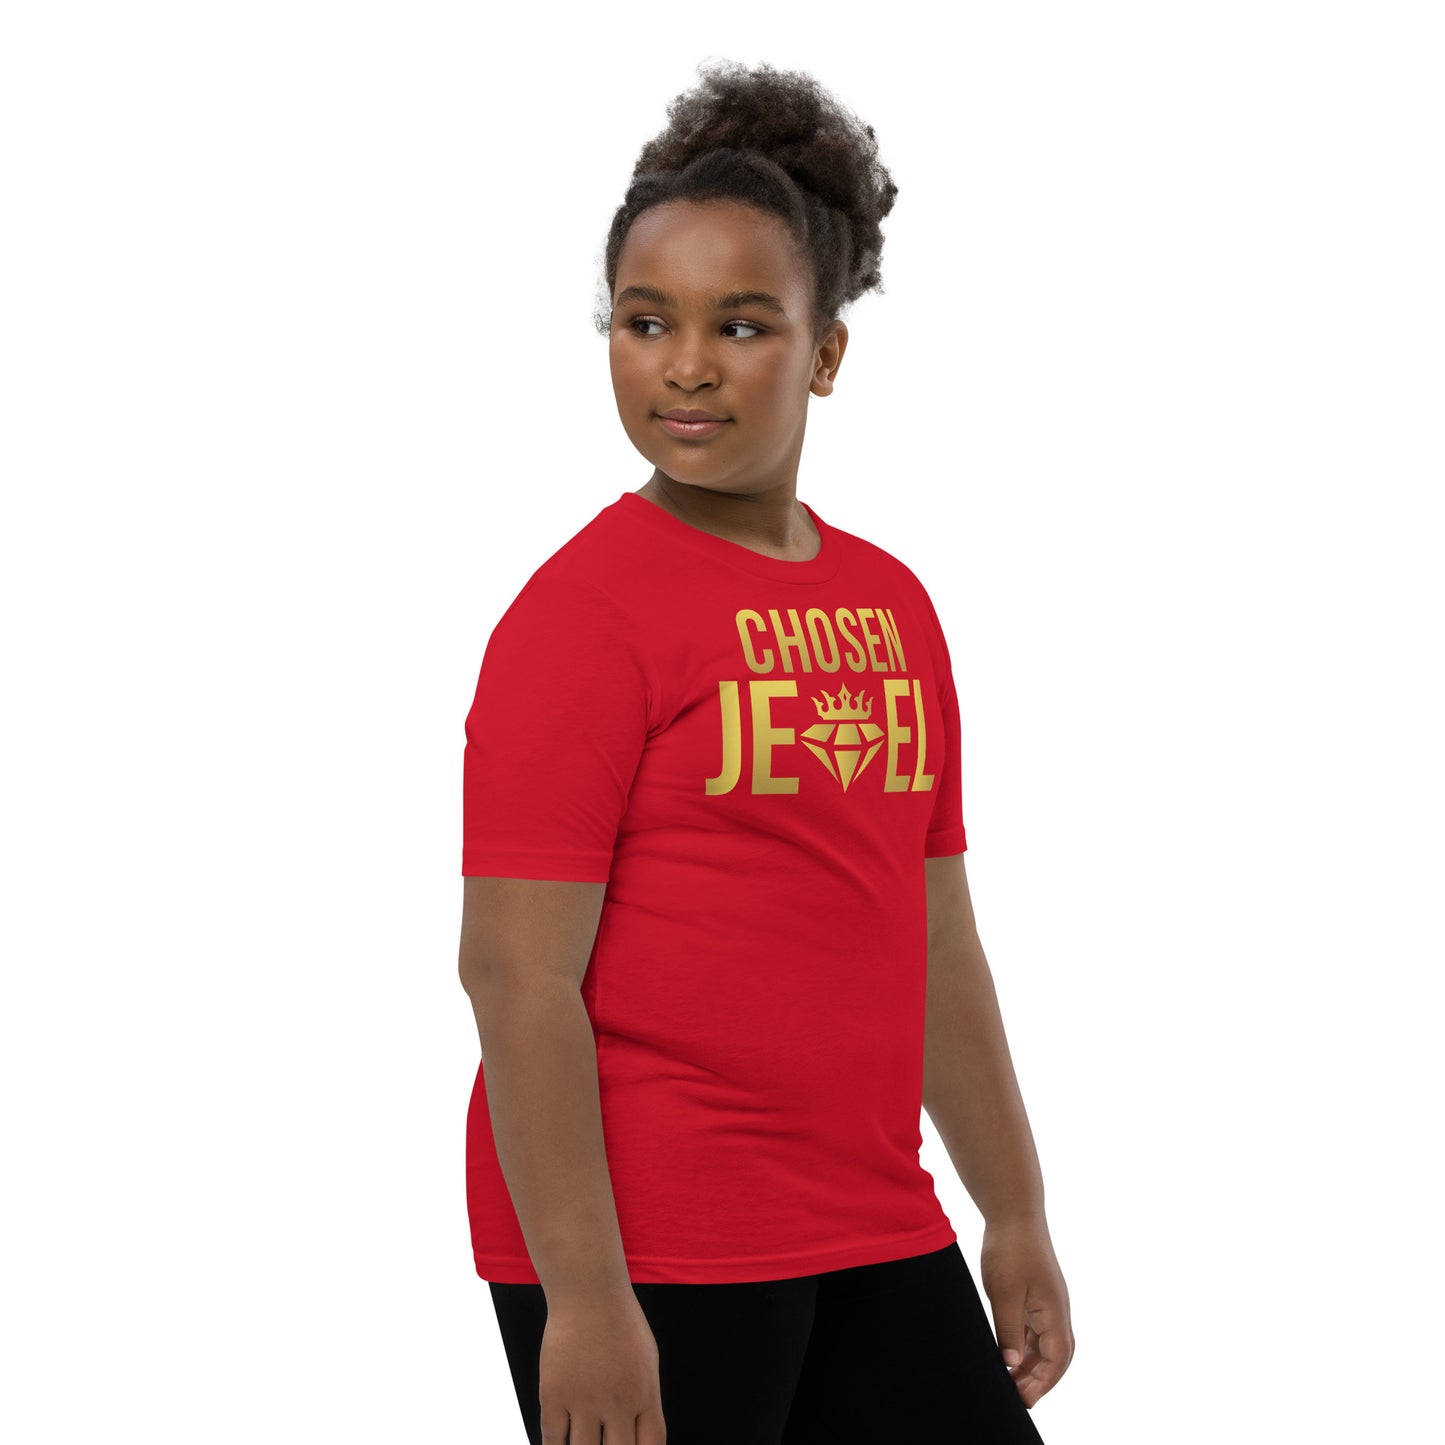 Chosen Jewel 1 Youth T-Shirt